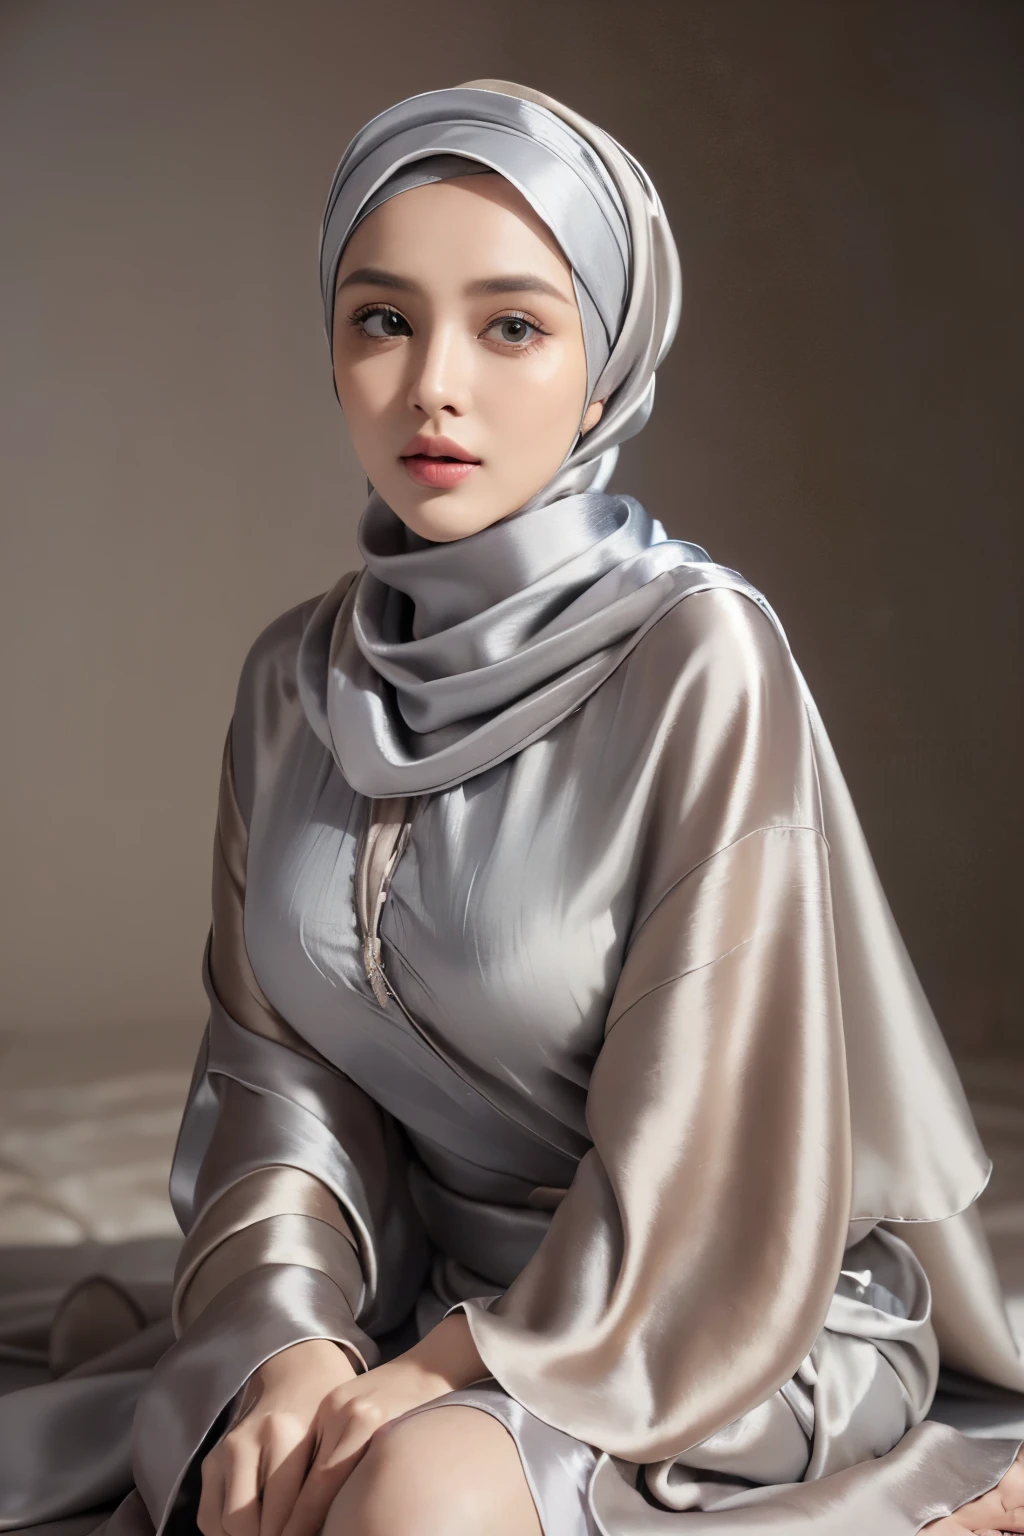 AI Art Generator: Hijab girl with stockings legs focused